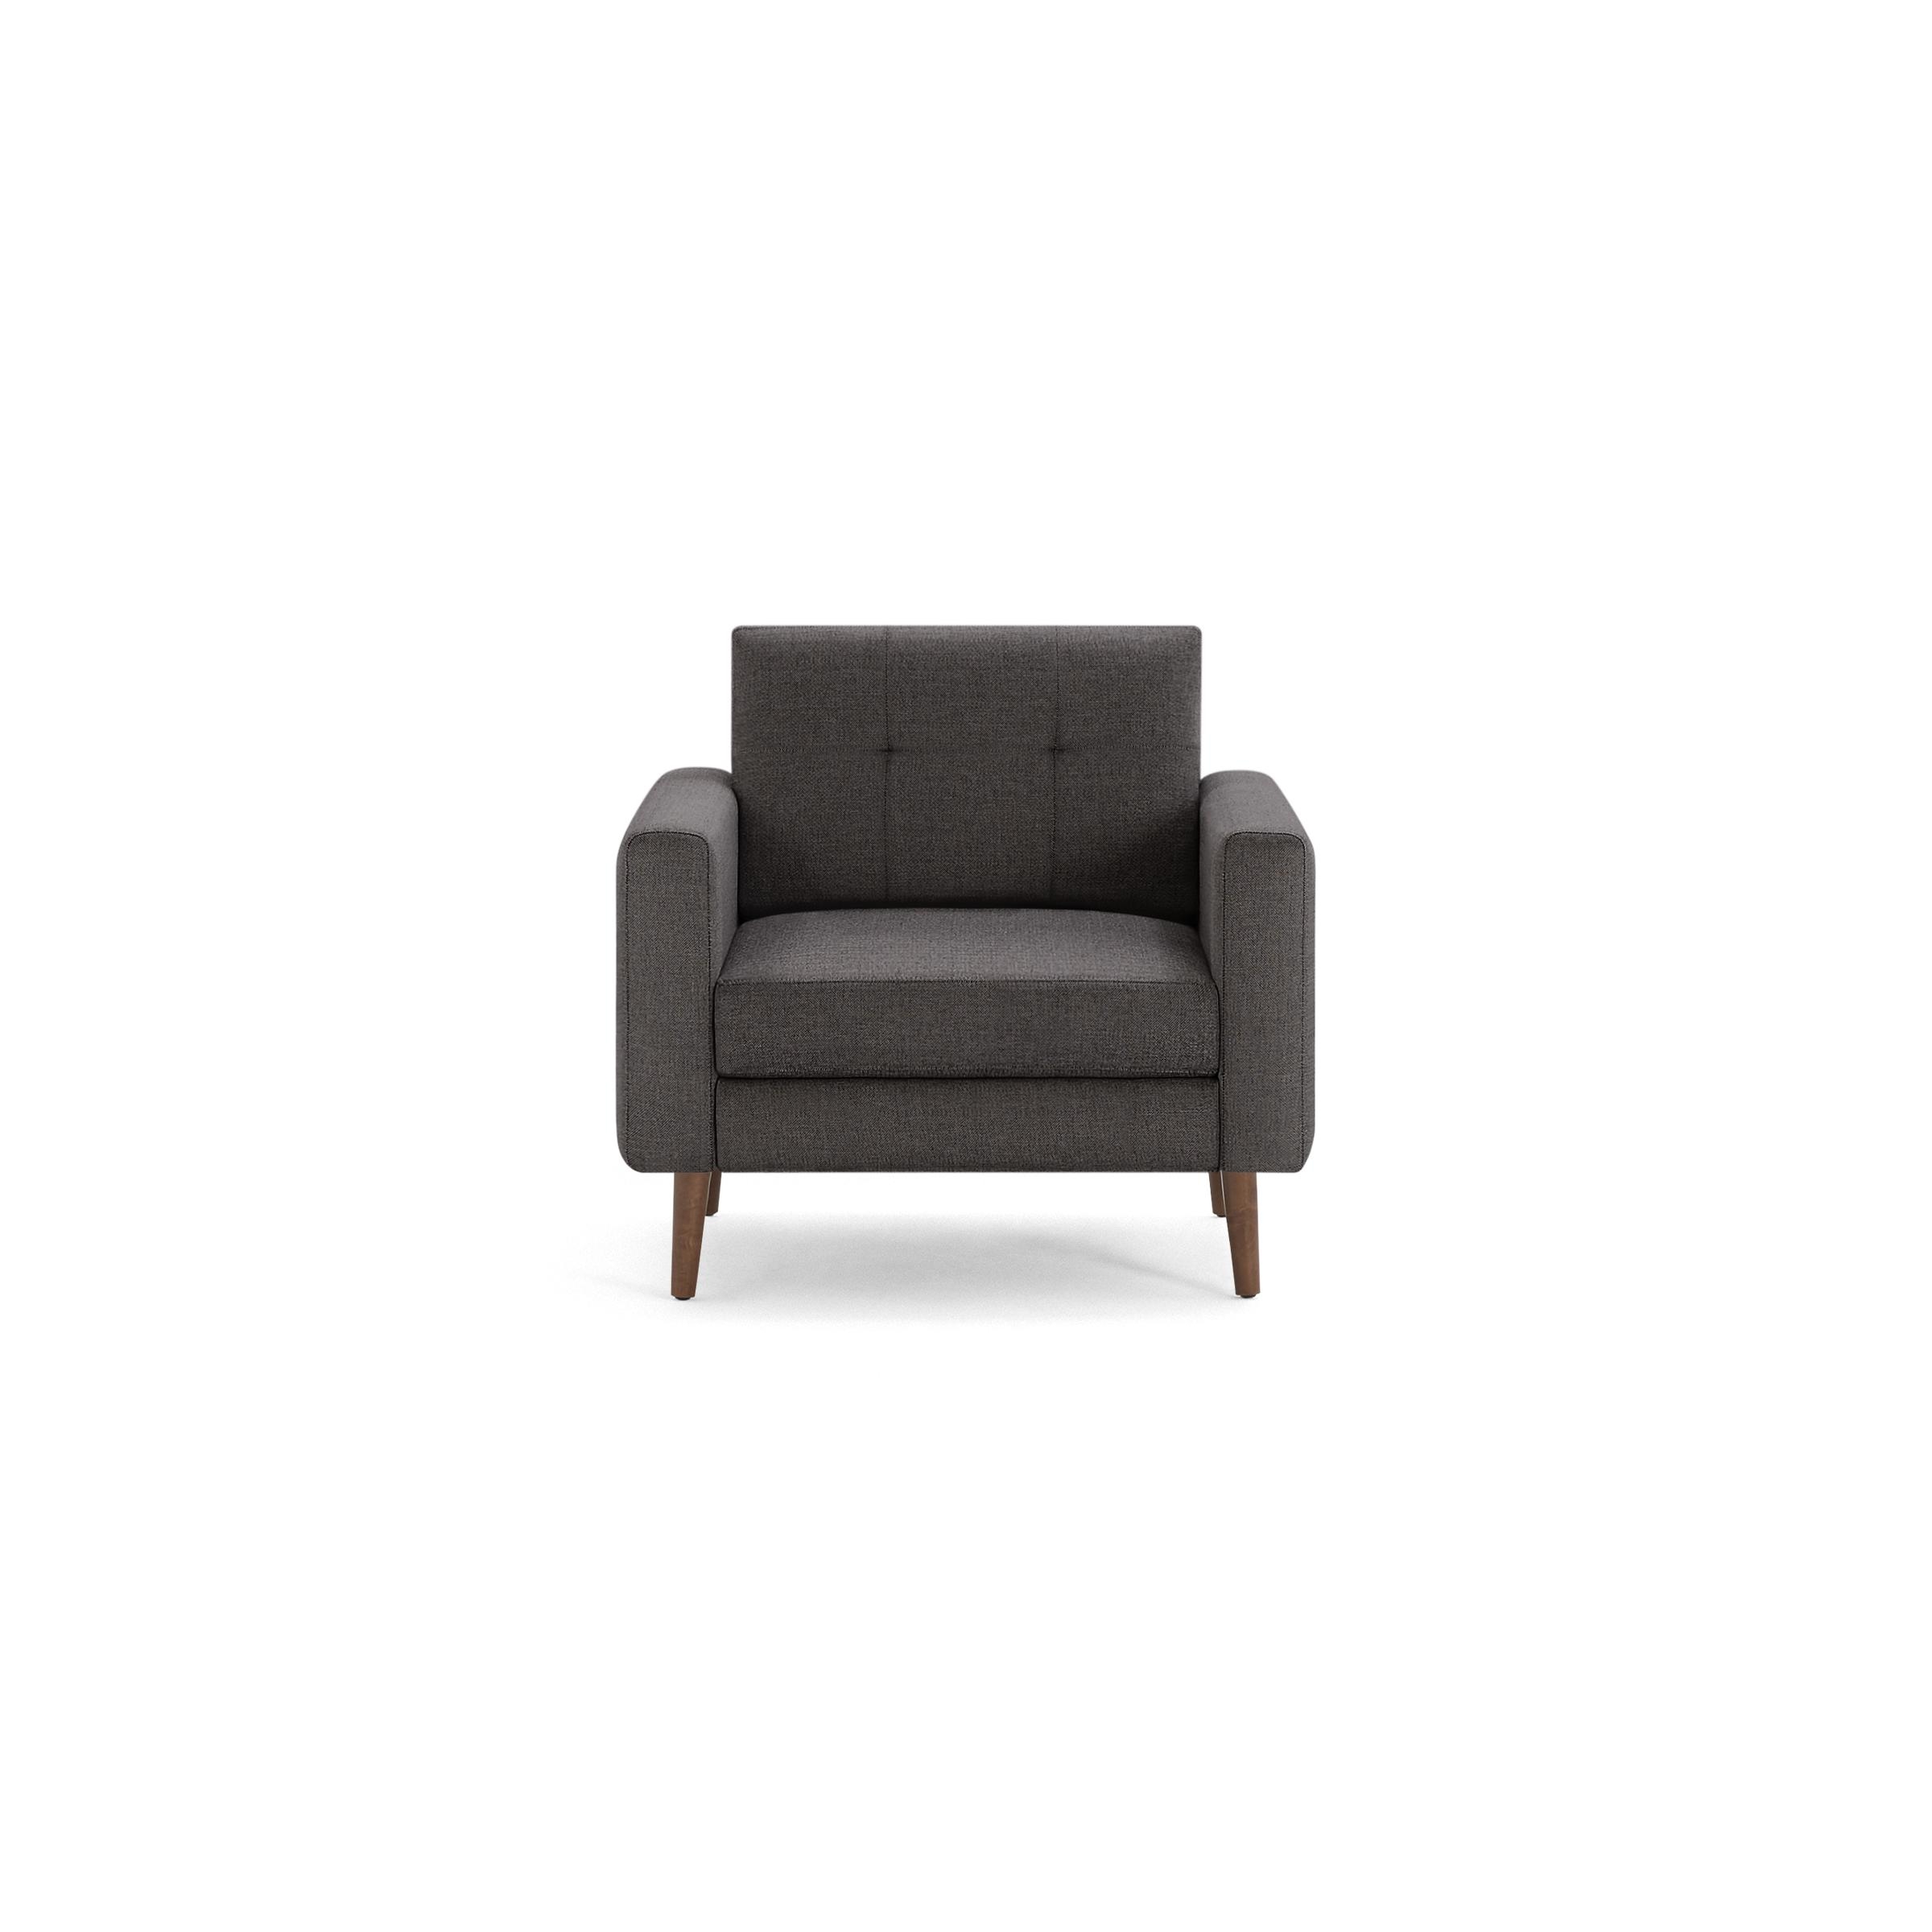 Nomad Armchair in Charcoal, Walnut Legs, Leg Finish: WalnutLegs - Image 0